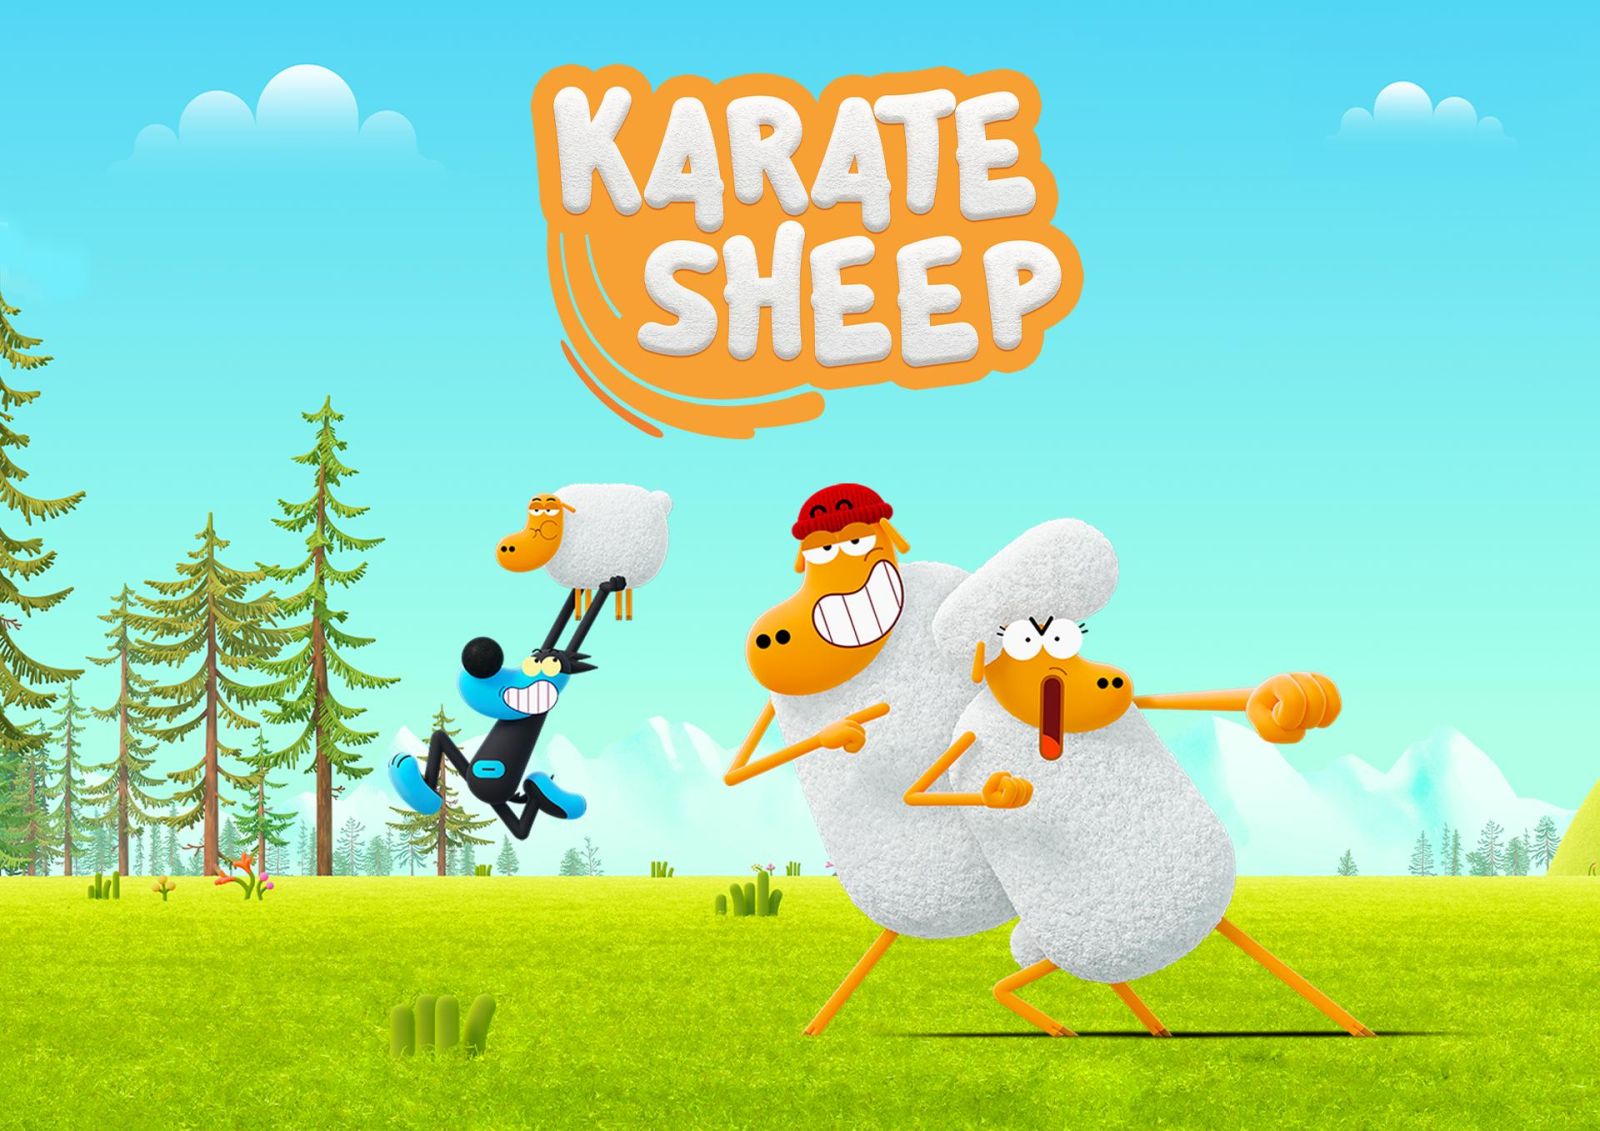 Chú cừu karate (phần 2) - Karate sheep (season 2)